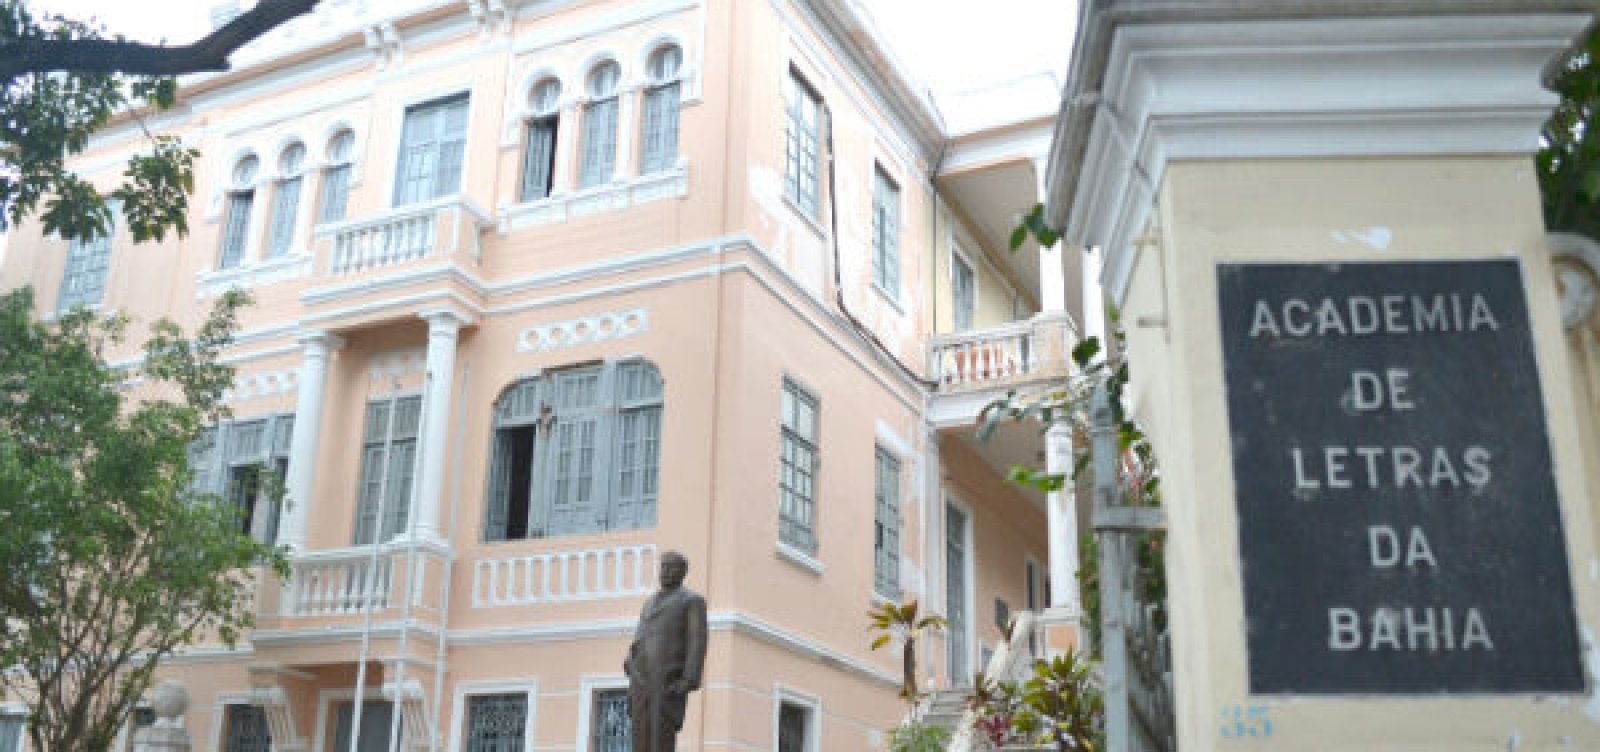 Sede da Academia de Letras da Bahia é arrombada e prejuízo ultrapassa R$ 8 mil em roubos